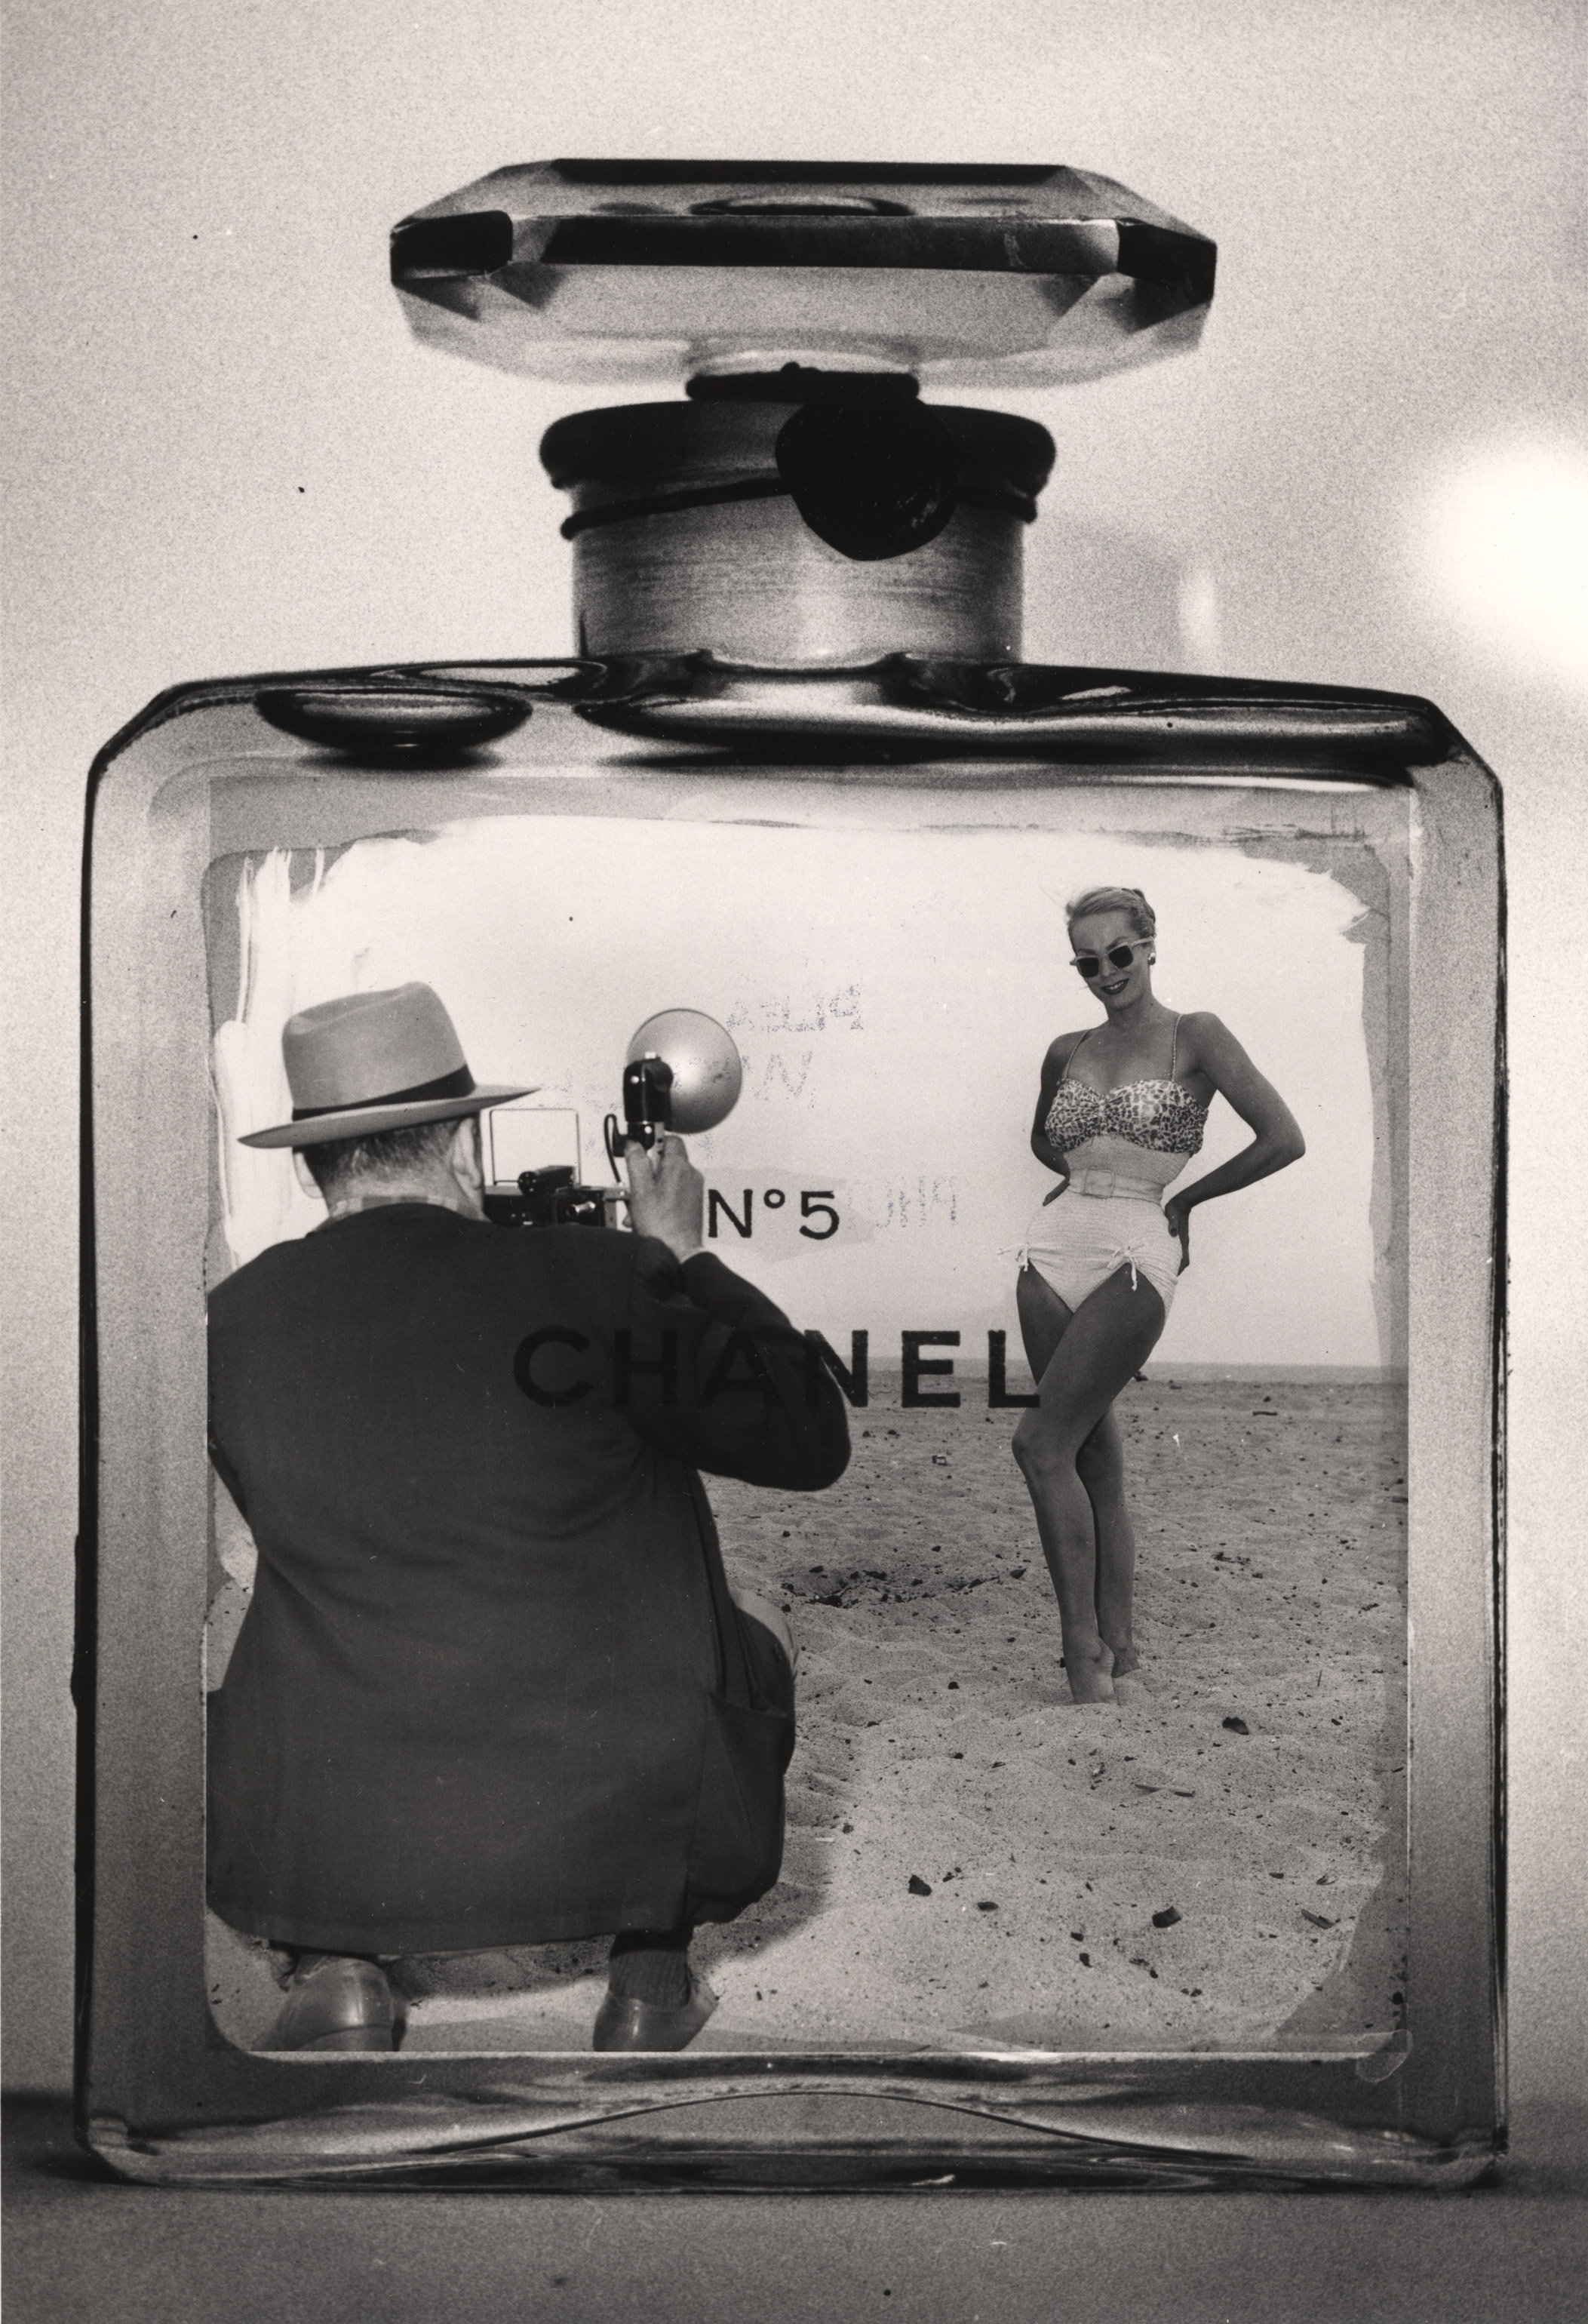 1956 Chanel Eau de Cologne No. 5 Ad - The most treasured name in